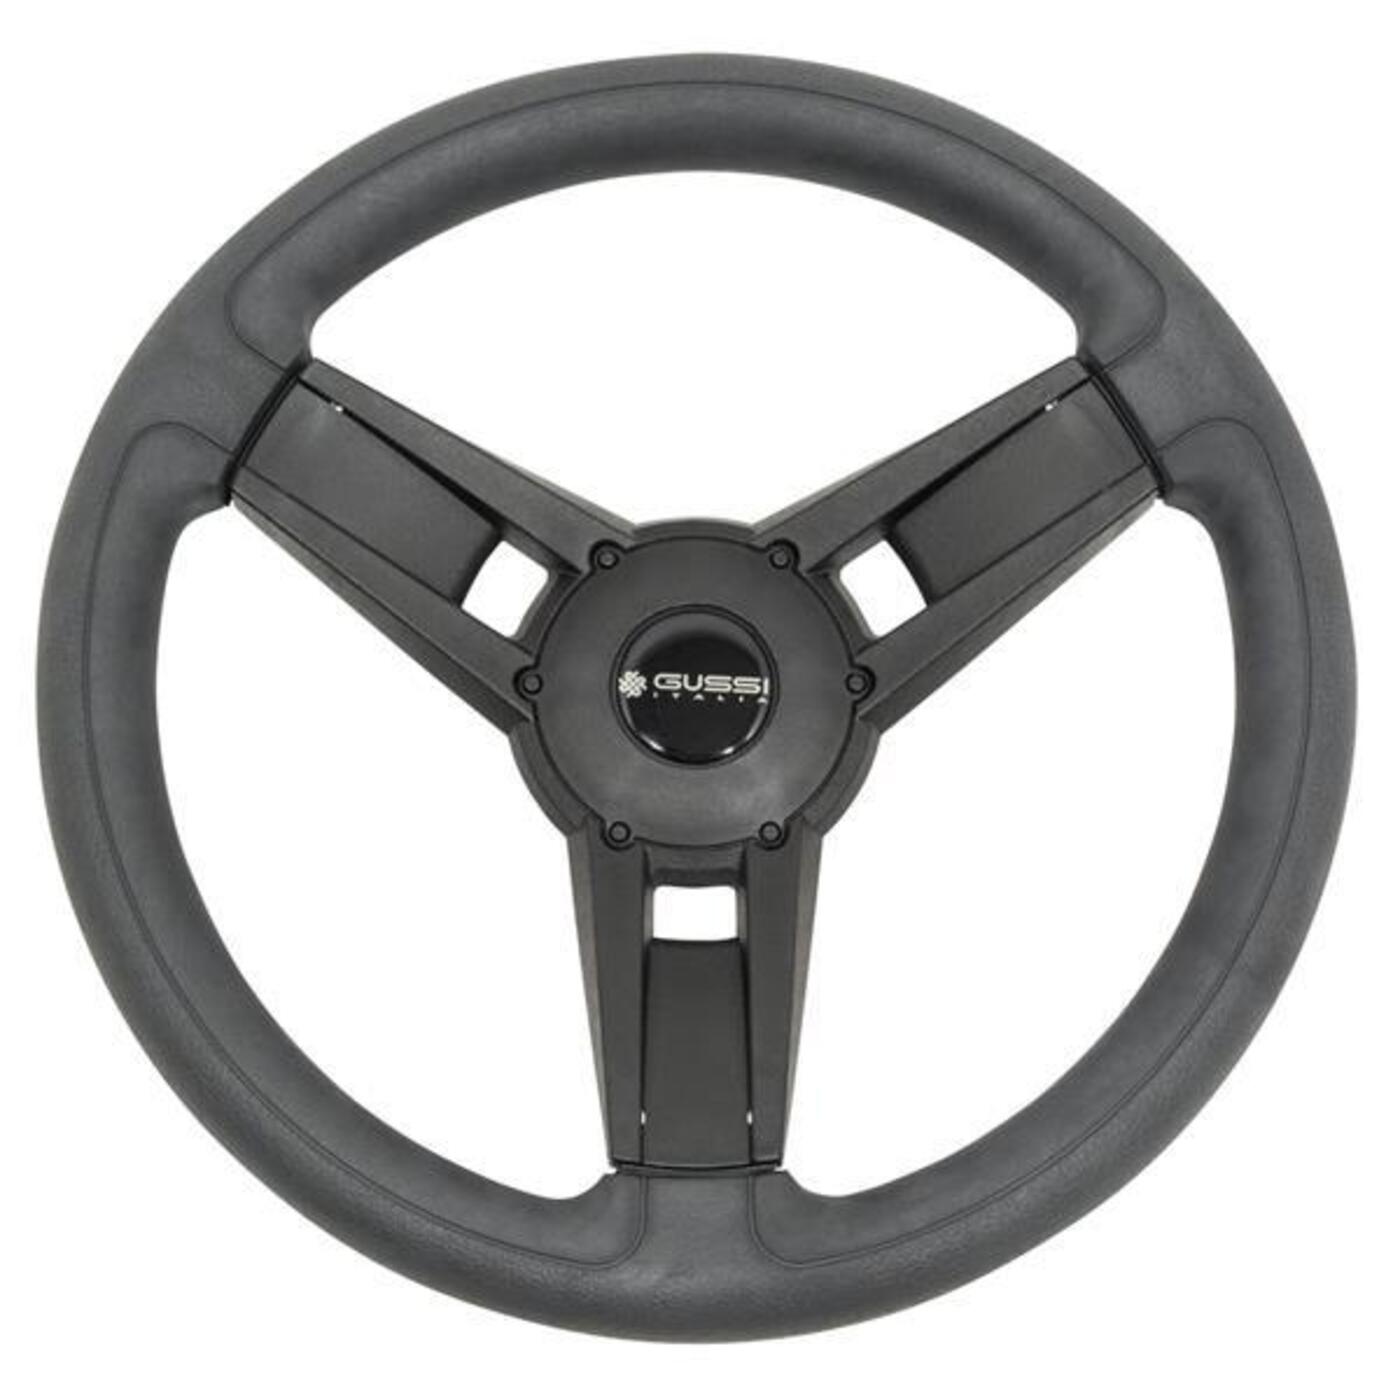 Gussi Italia Giazza Black Steering Wheel For All Club Car Precedent Models 06-125